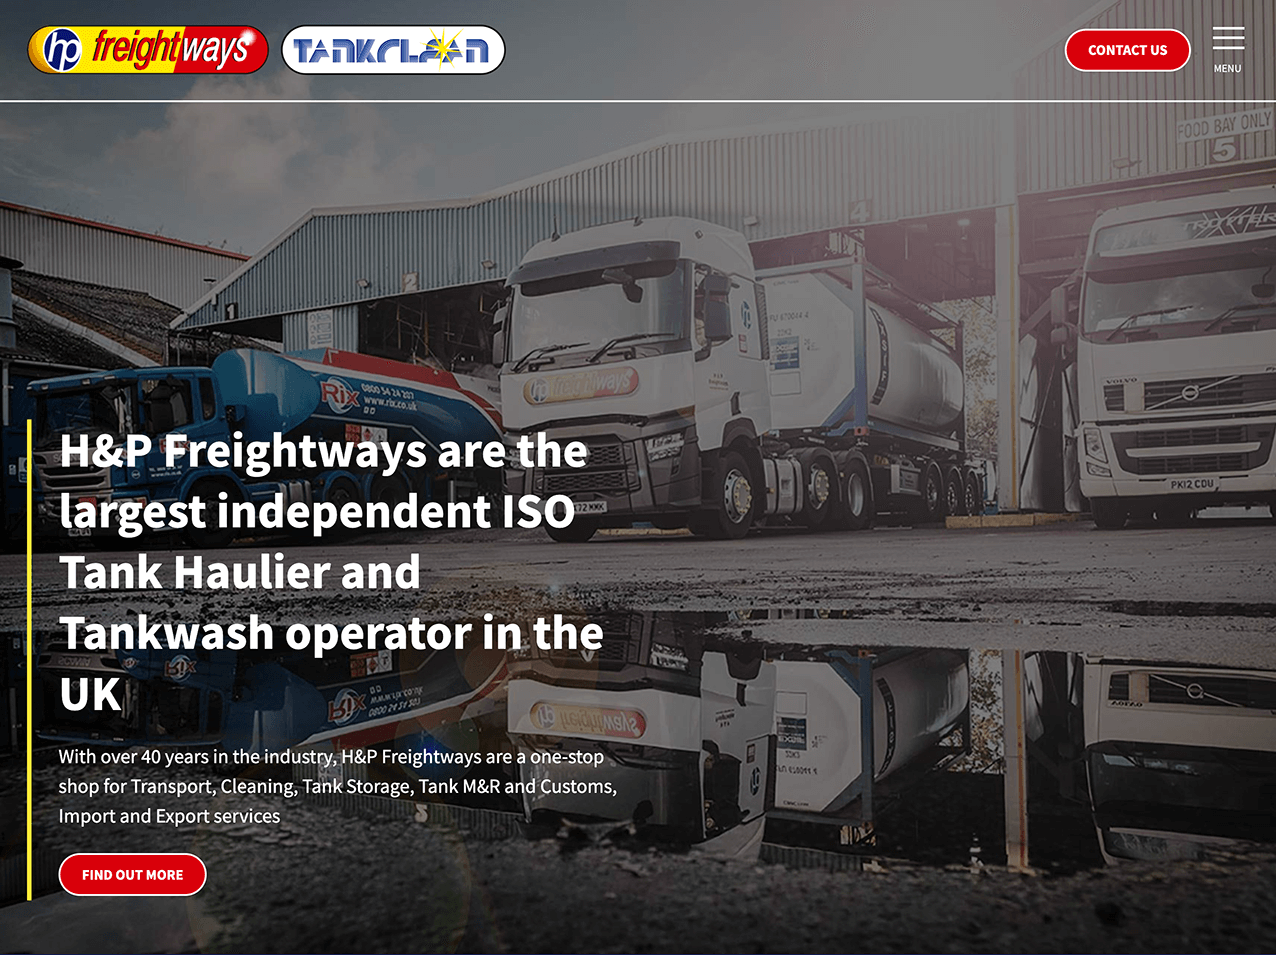 H&P freightways website